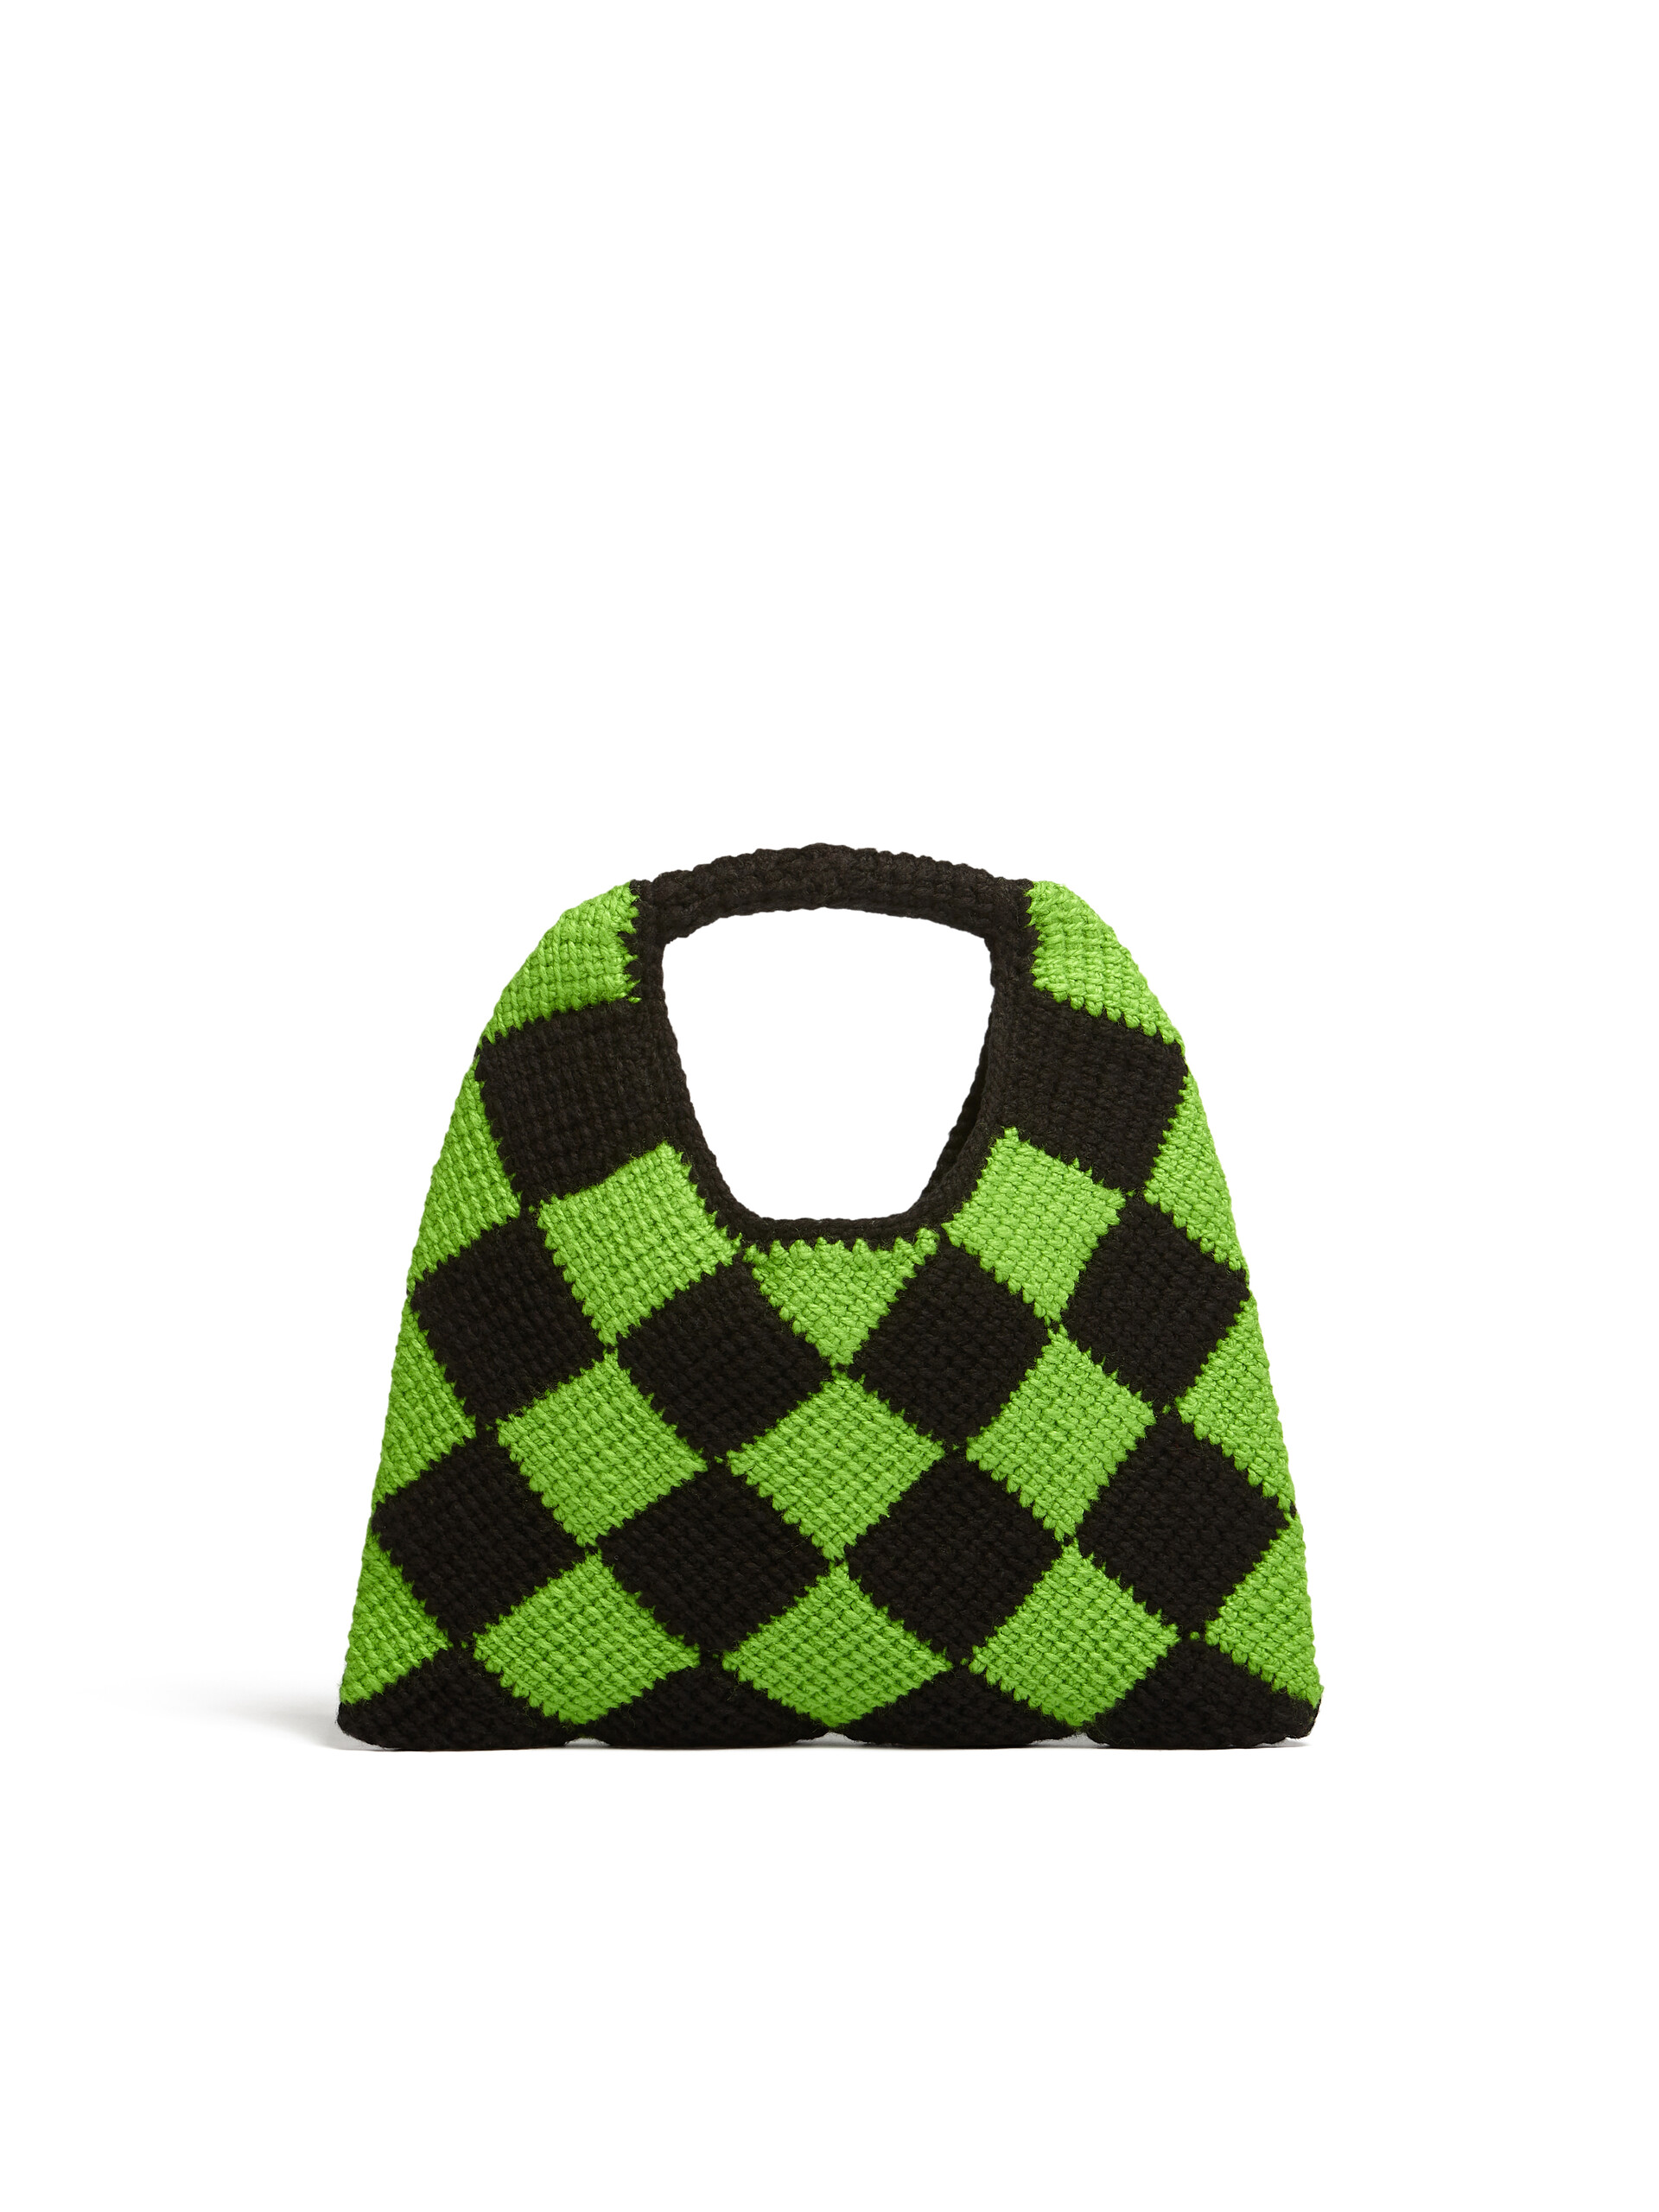 MARNI MARKET DIAMOND medium bag in green and black tech wool - Shopping Bags - Image 3